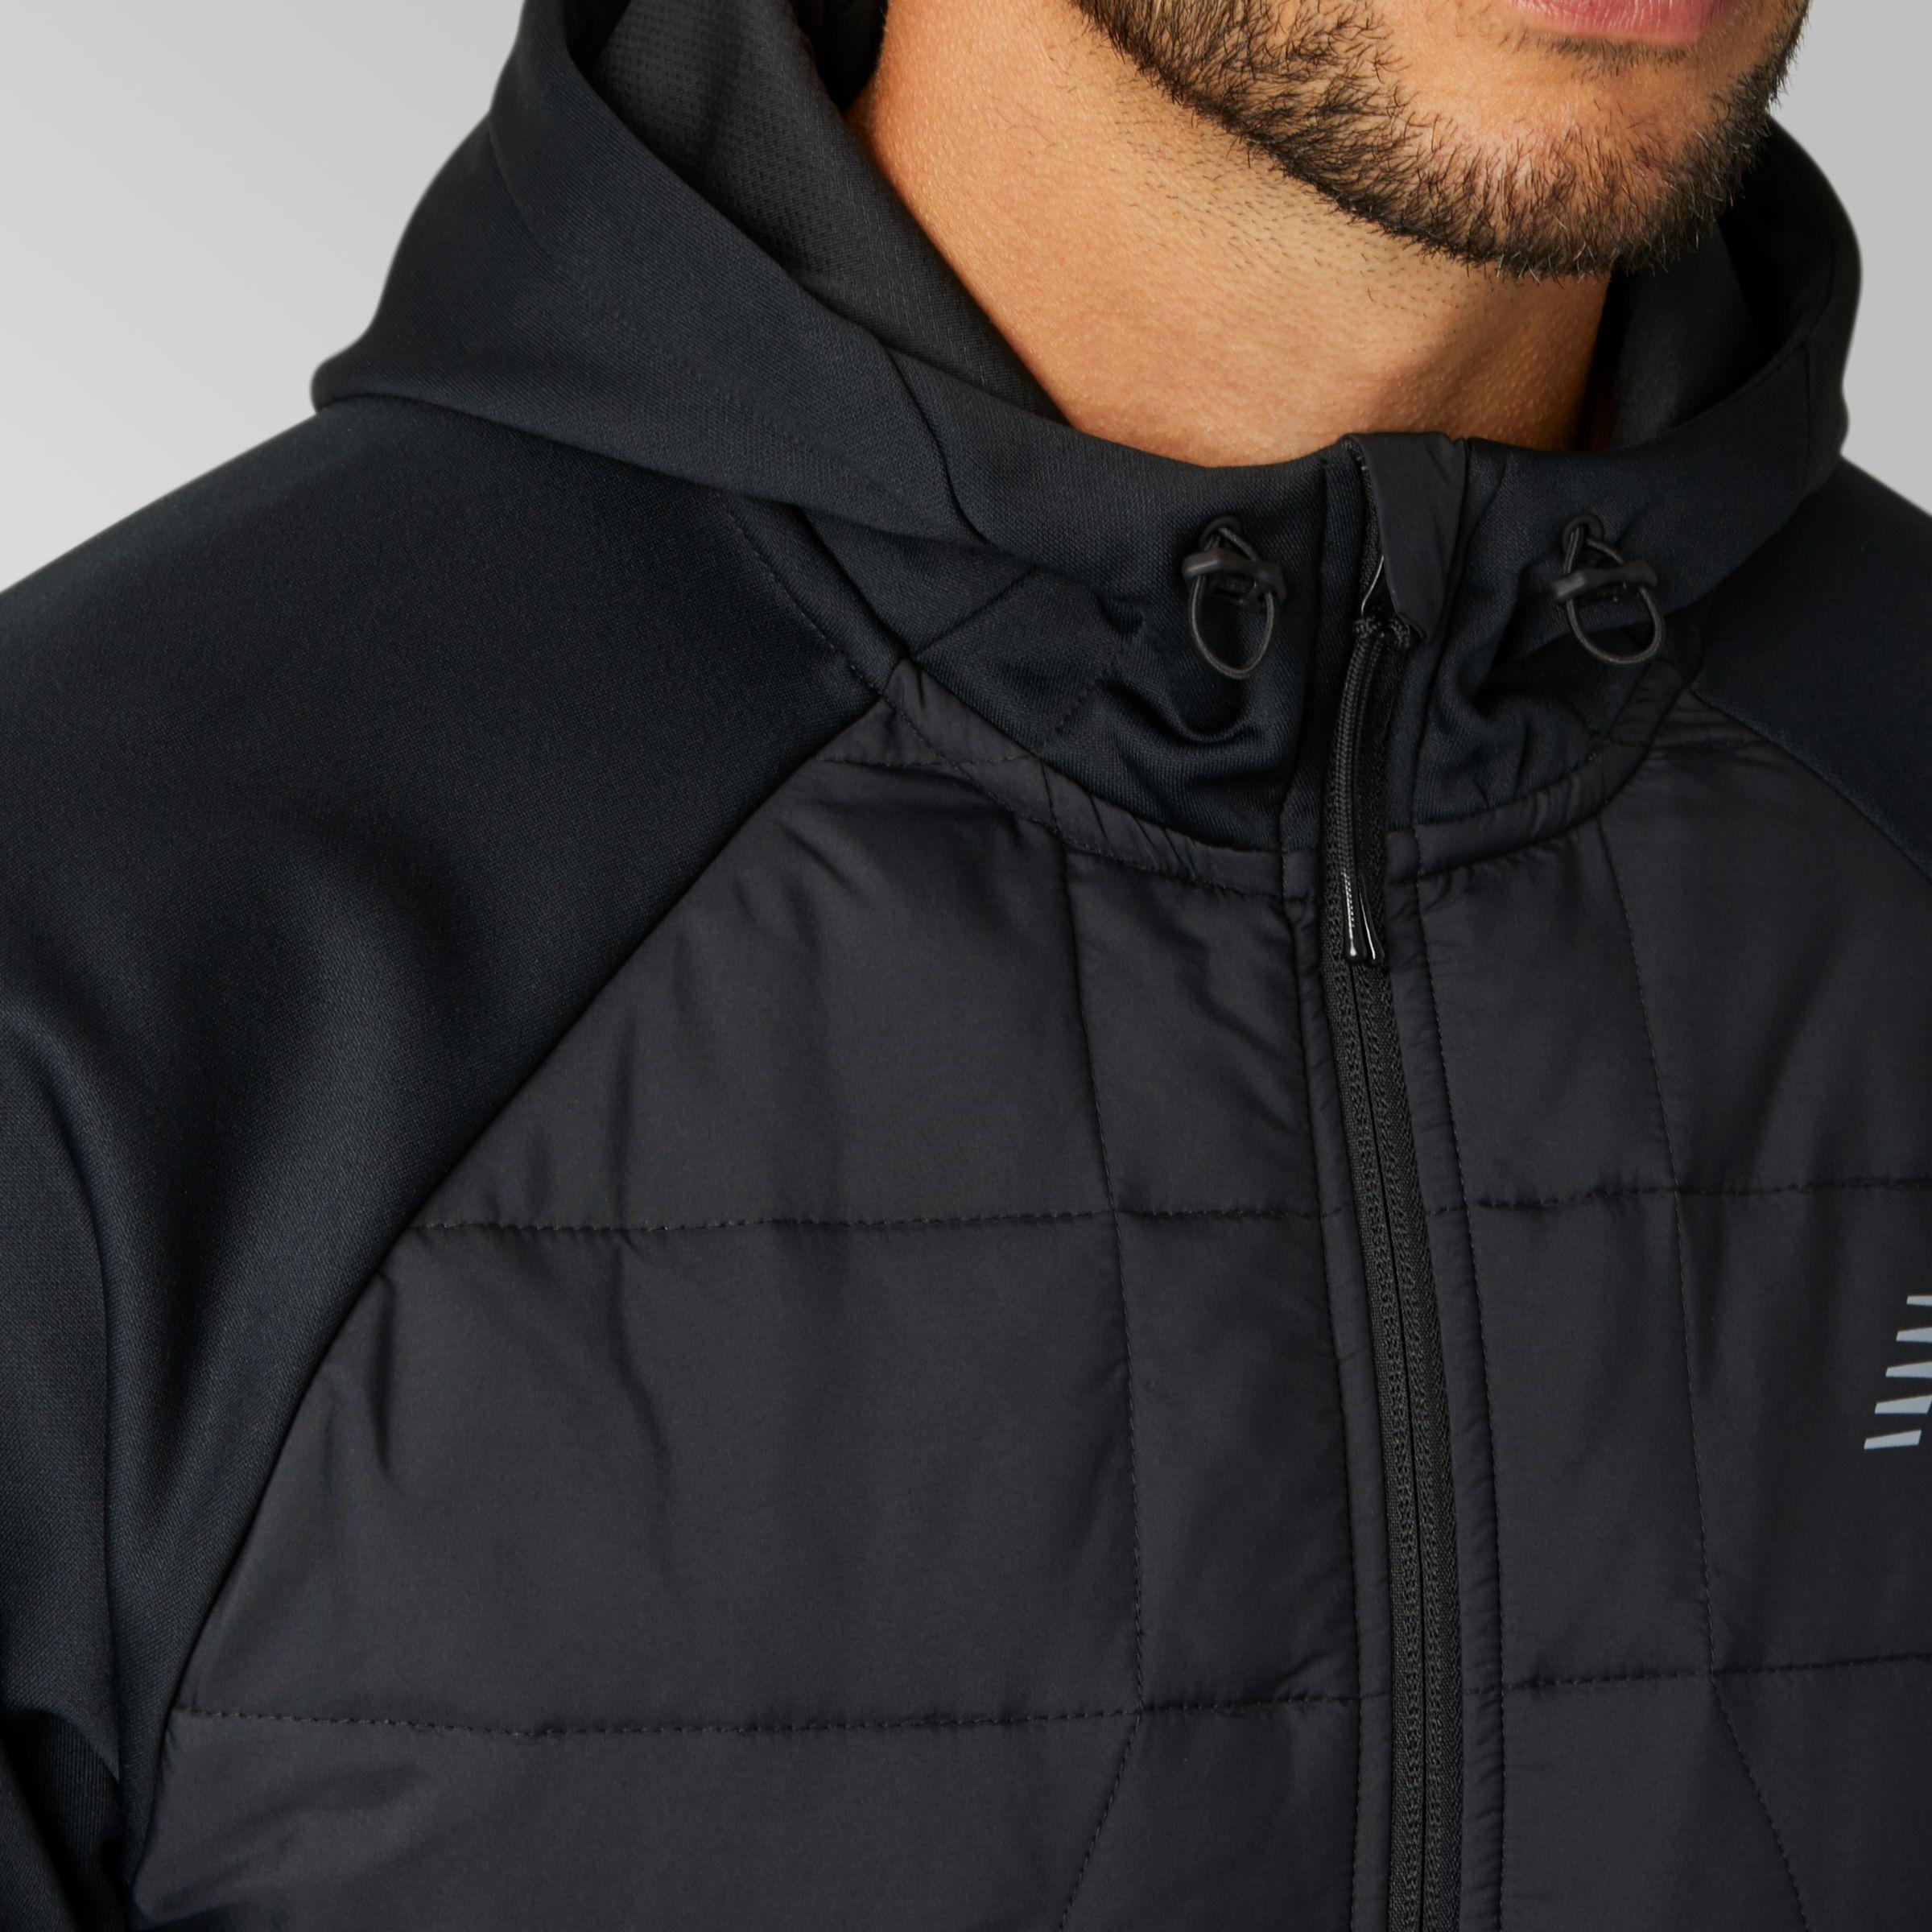 New Balance Fleece New Balance Tenacity Hybrid Puffer Jacket in Black ...